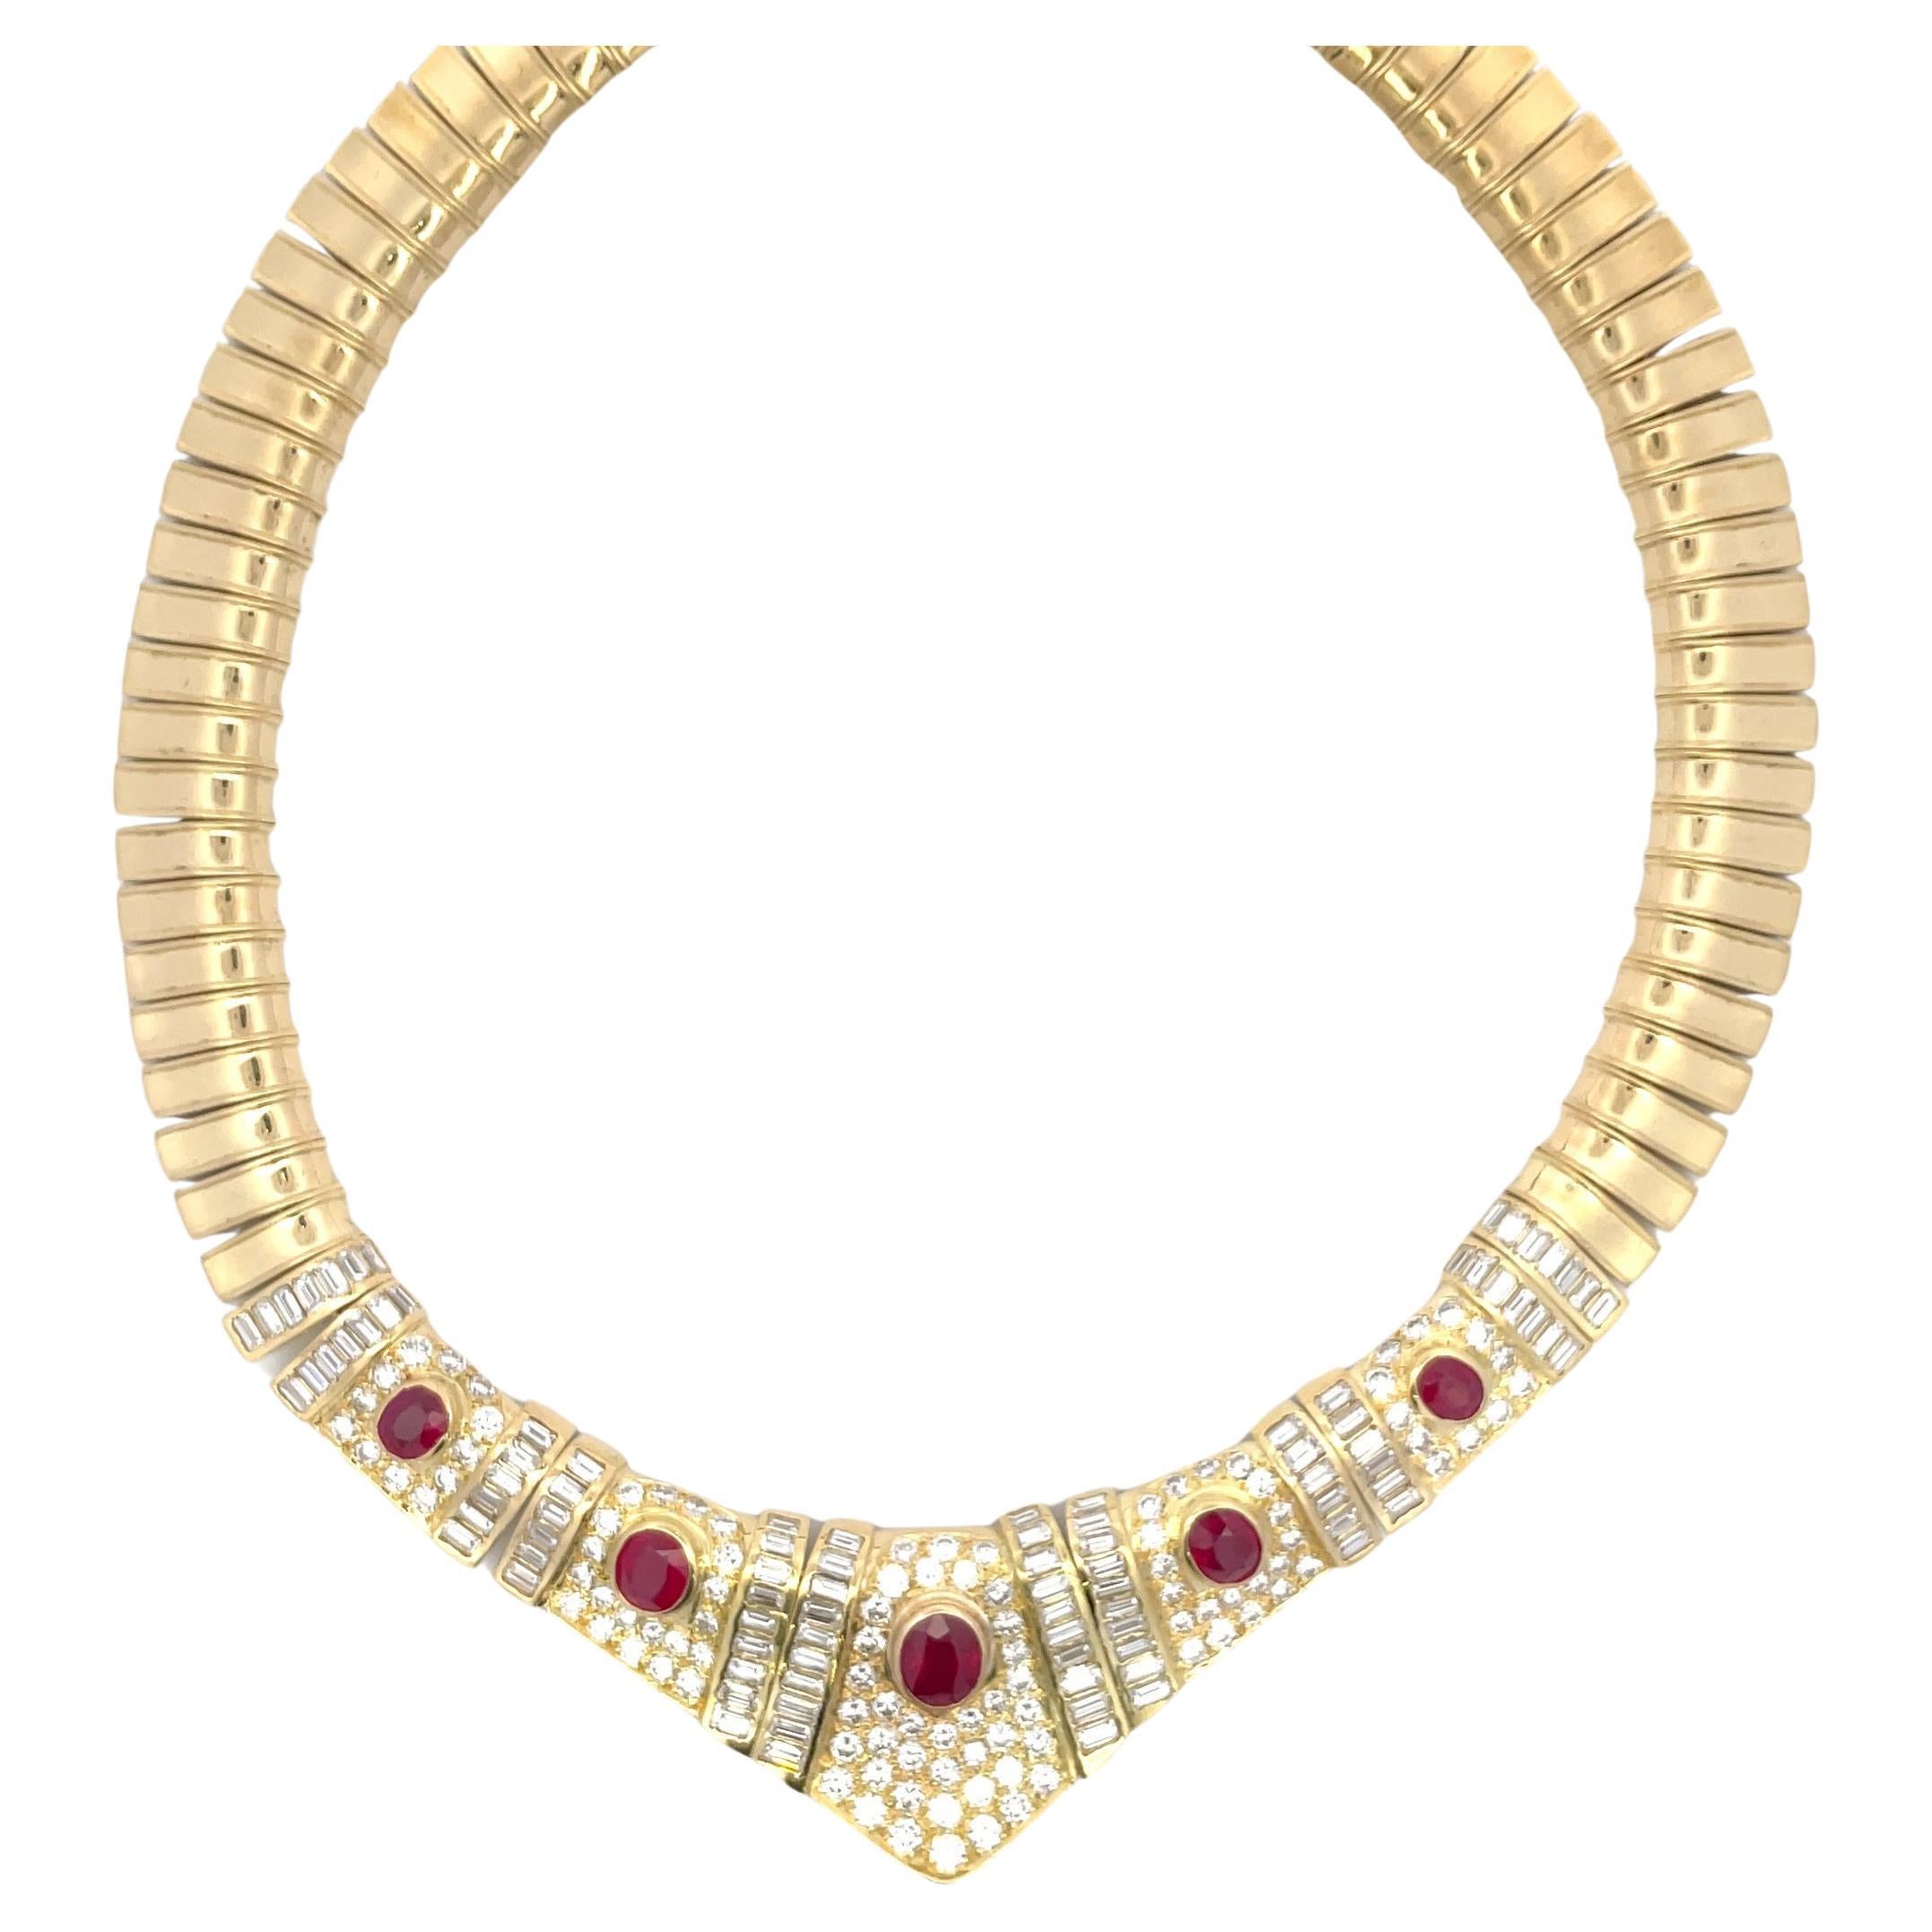 Certified Burma Ruby Diamond Collar Necklace 24.50 Carats 18 Karat Yellow Gold For Sale 2